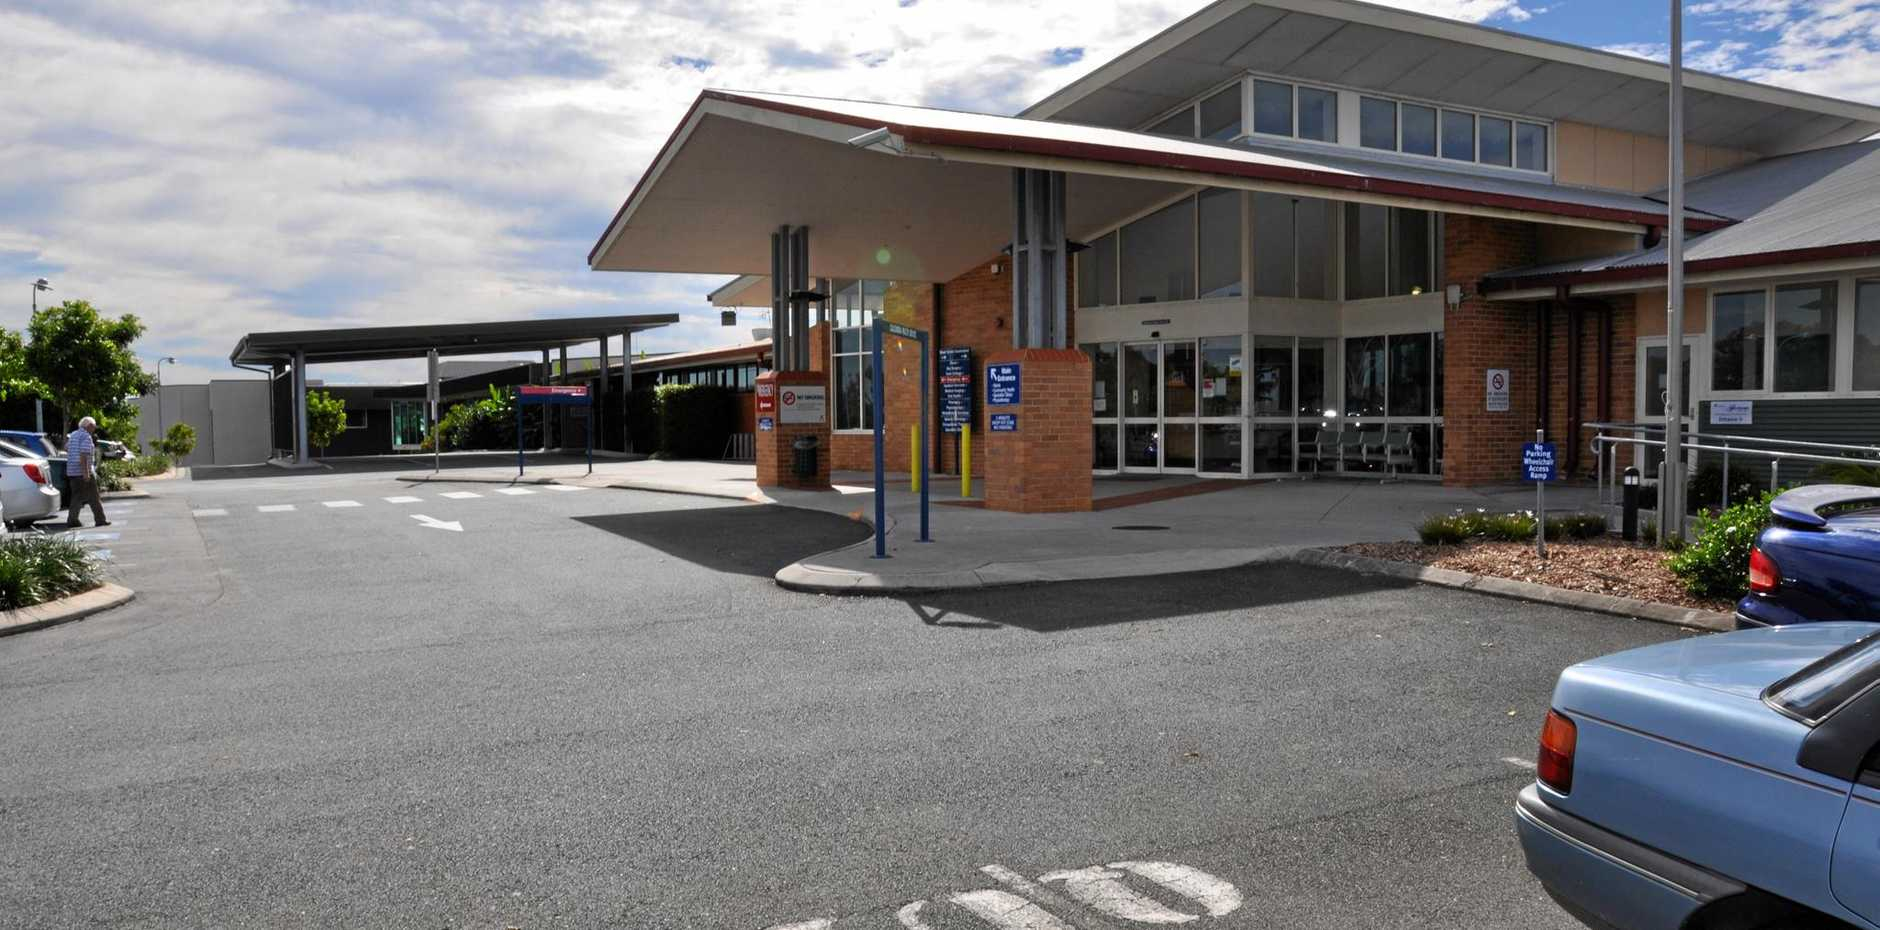 Caloundra Hospital s Emergency Department To Close Sunshine Coast Daily